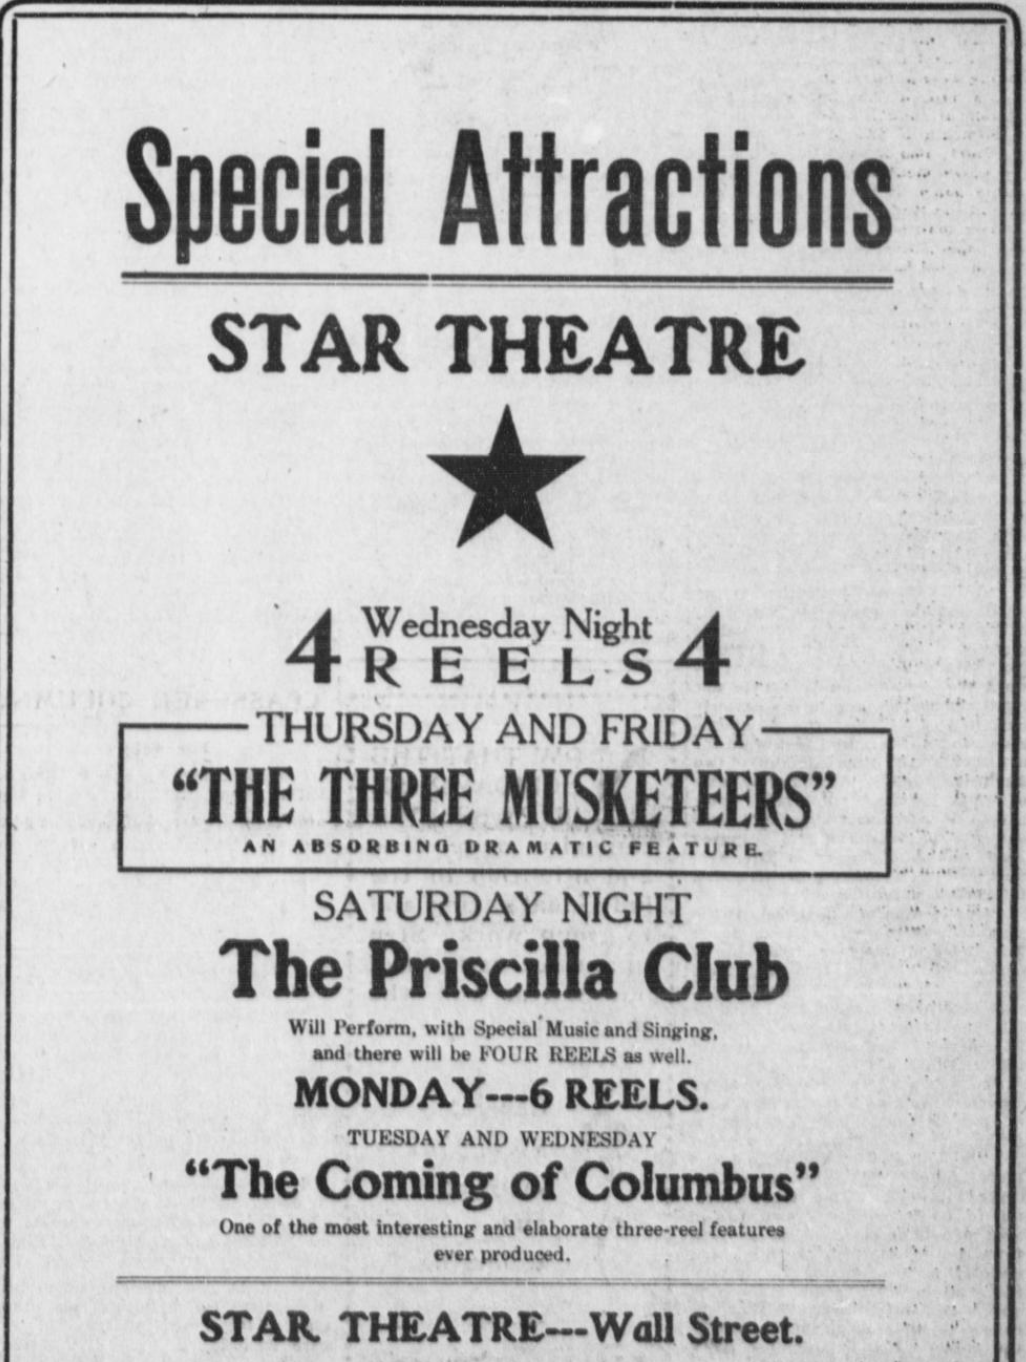 The Bend Bulletin. Jan. 15, 1913. Historic Oregon Newspapers. 